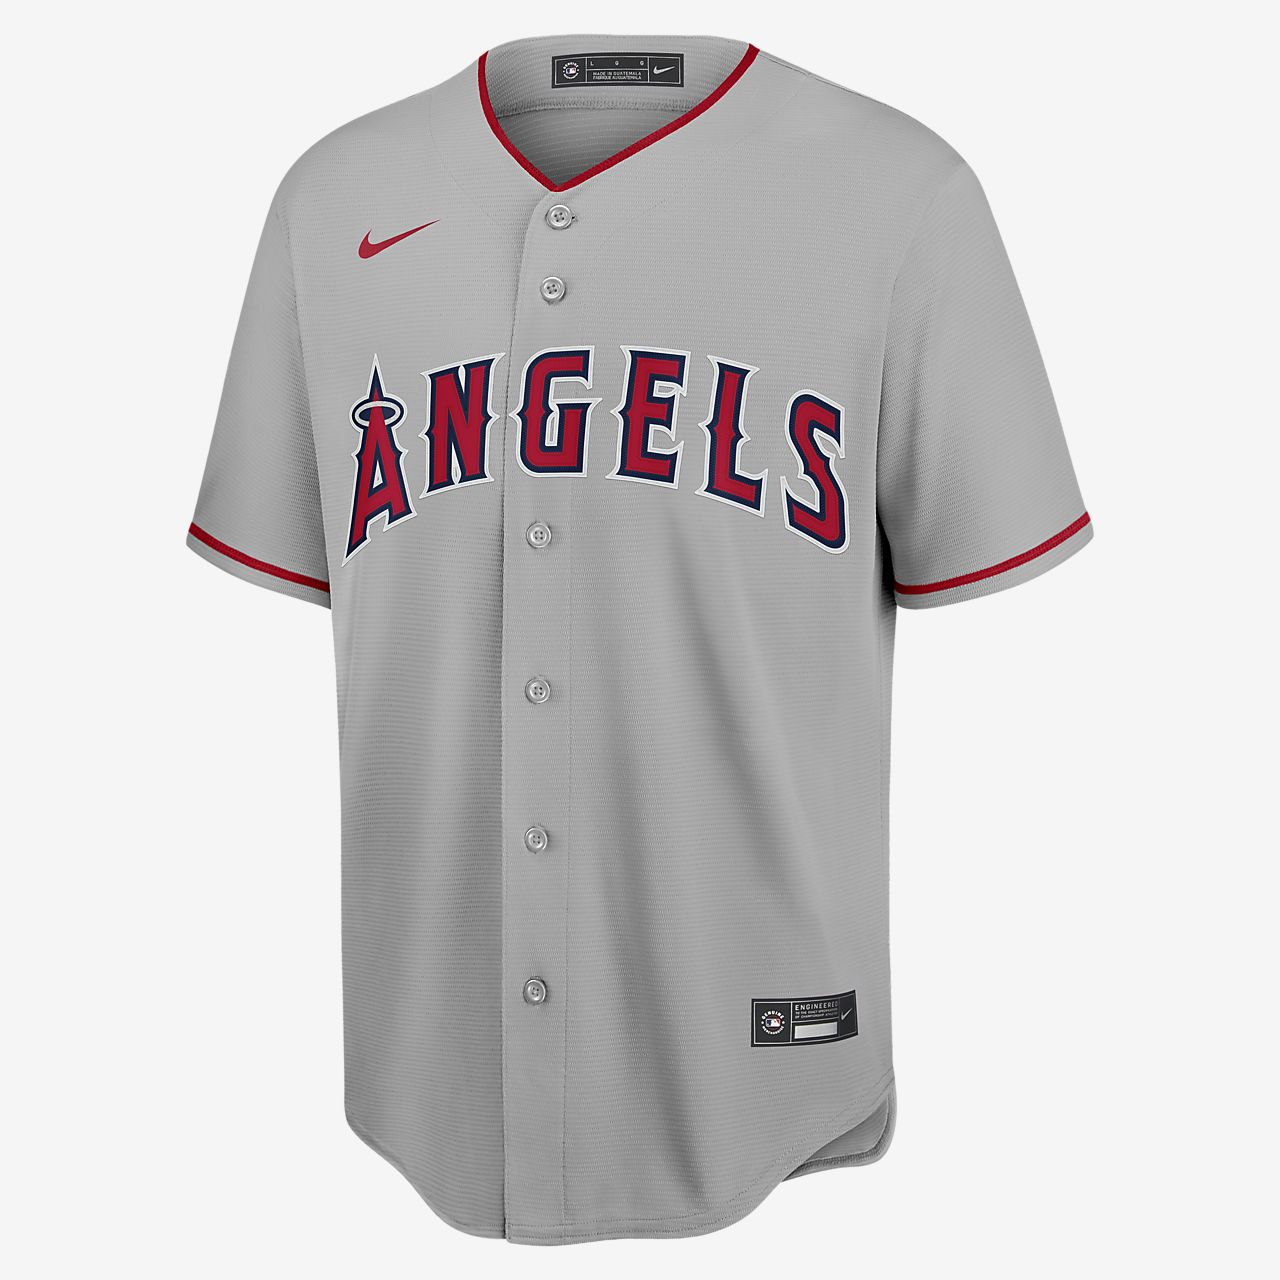 los angeles angels baseball jersey